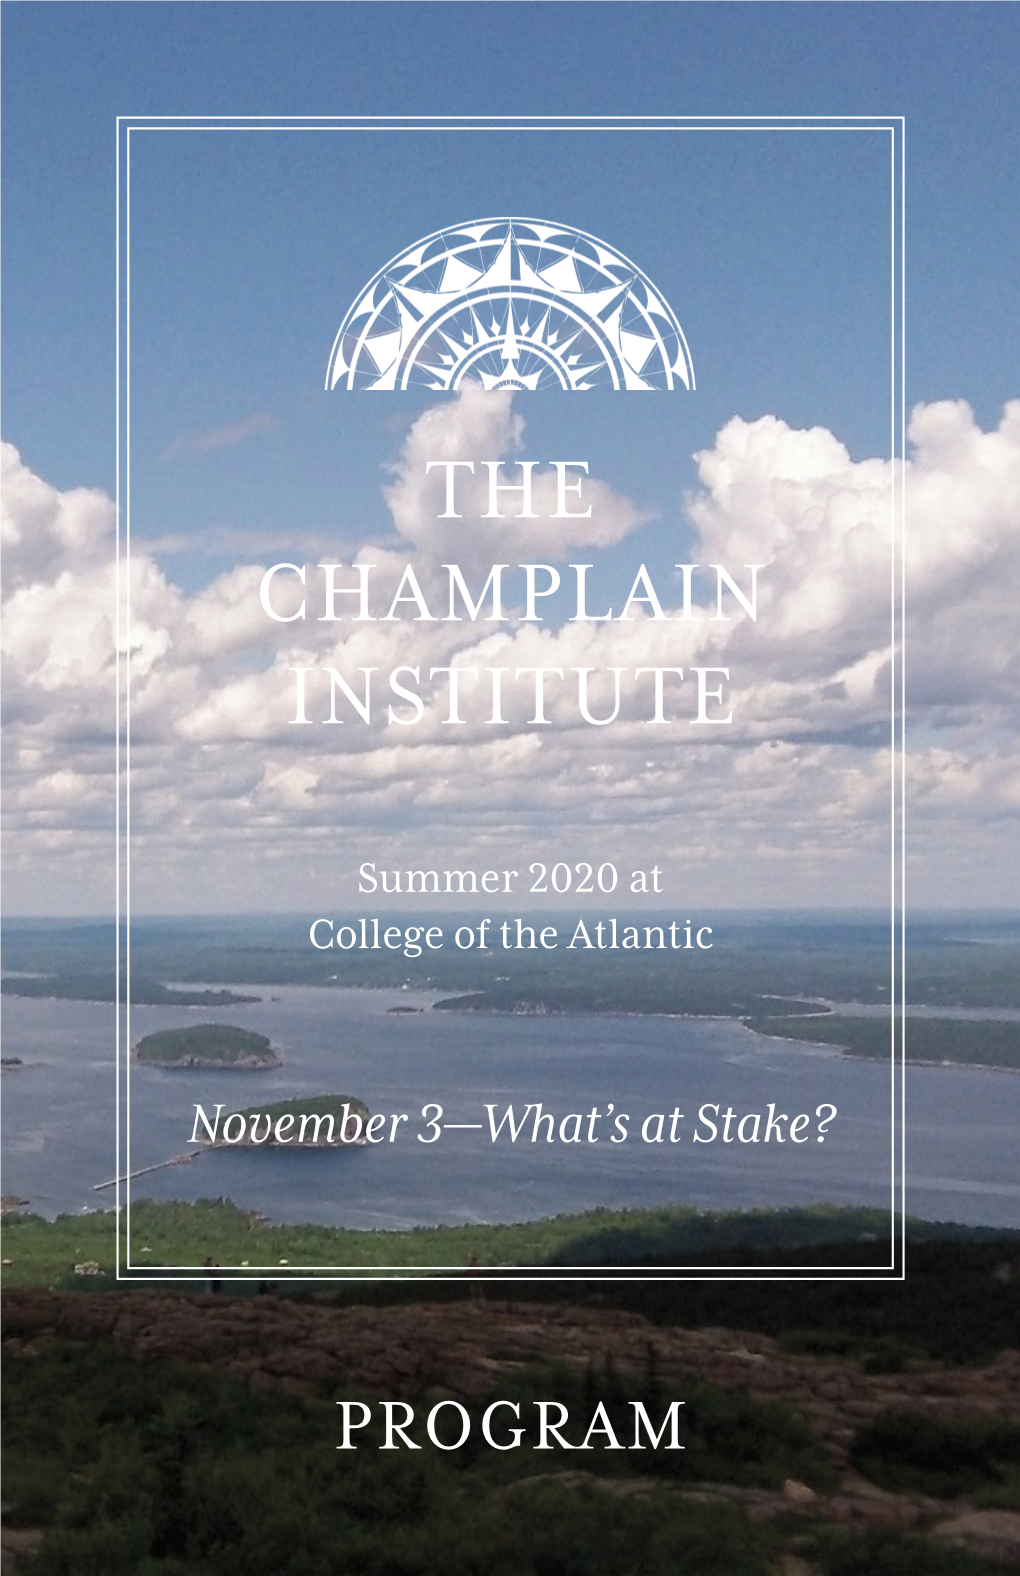 The Champlain Institute